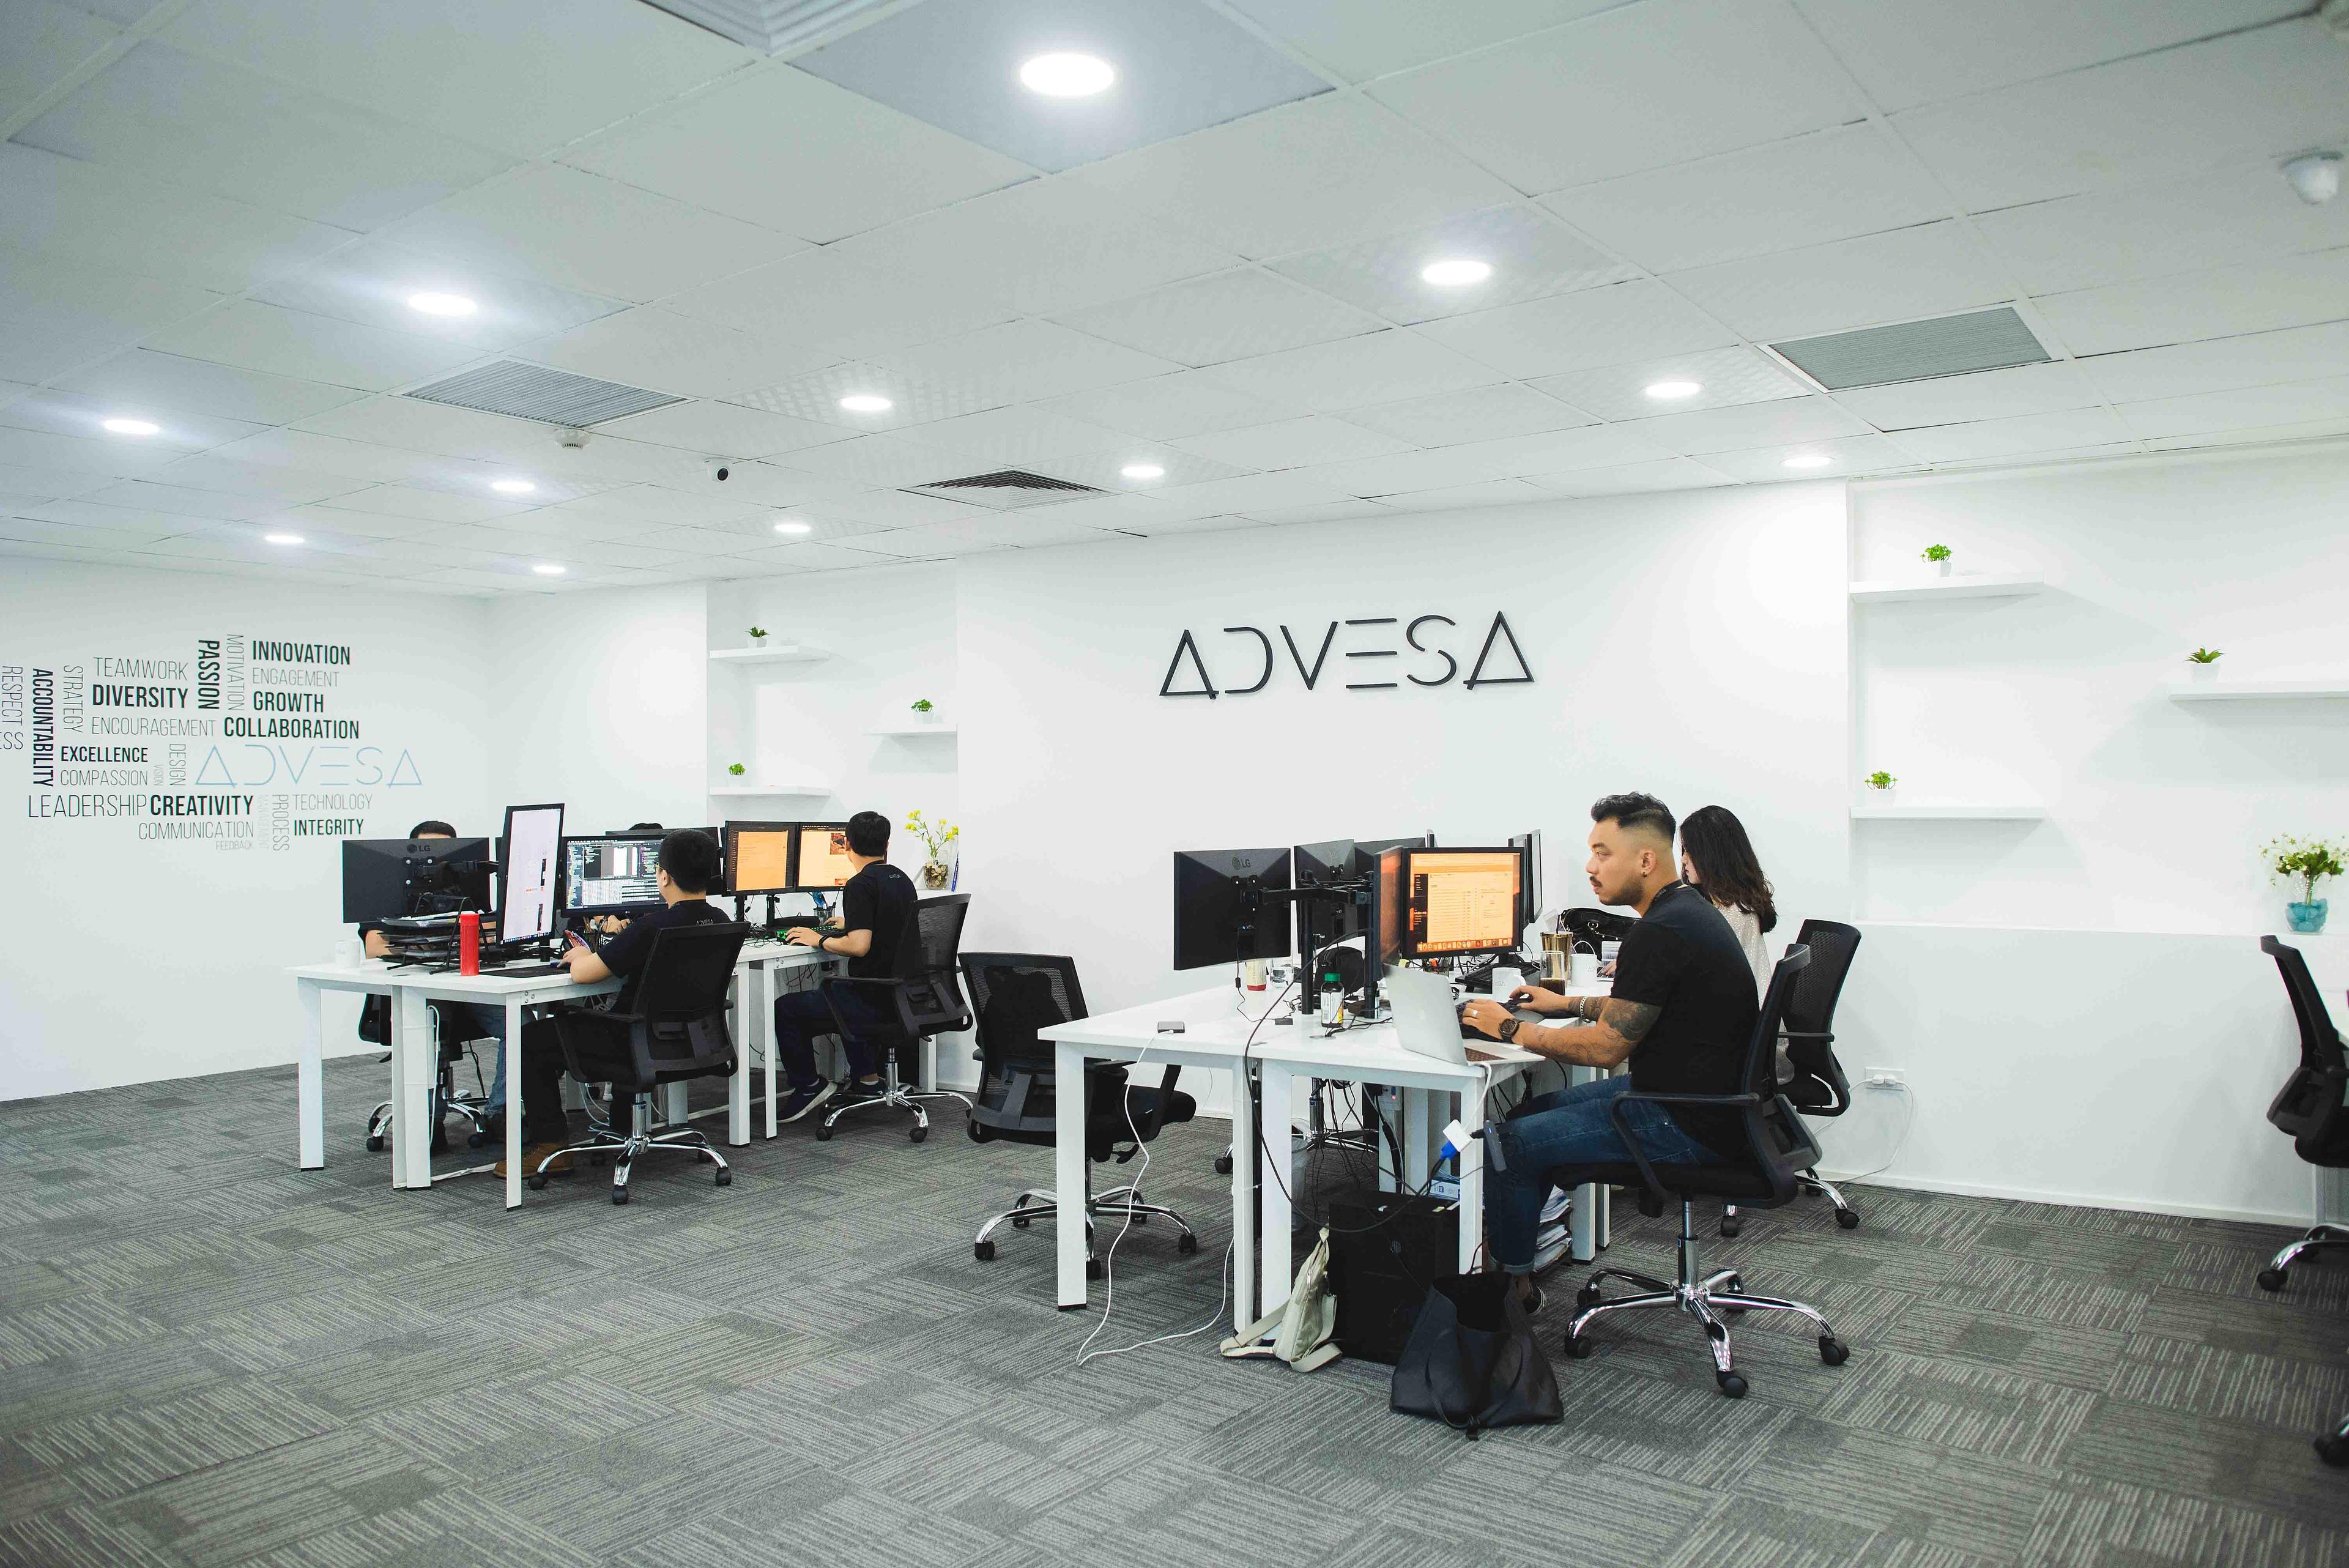 Advesa Digital Solutions